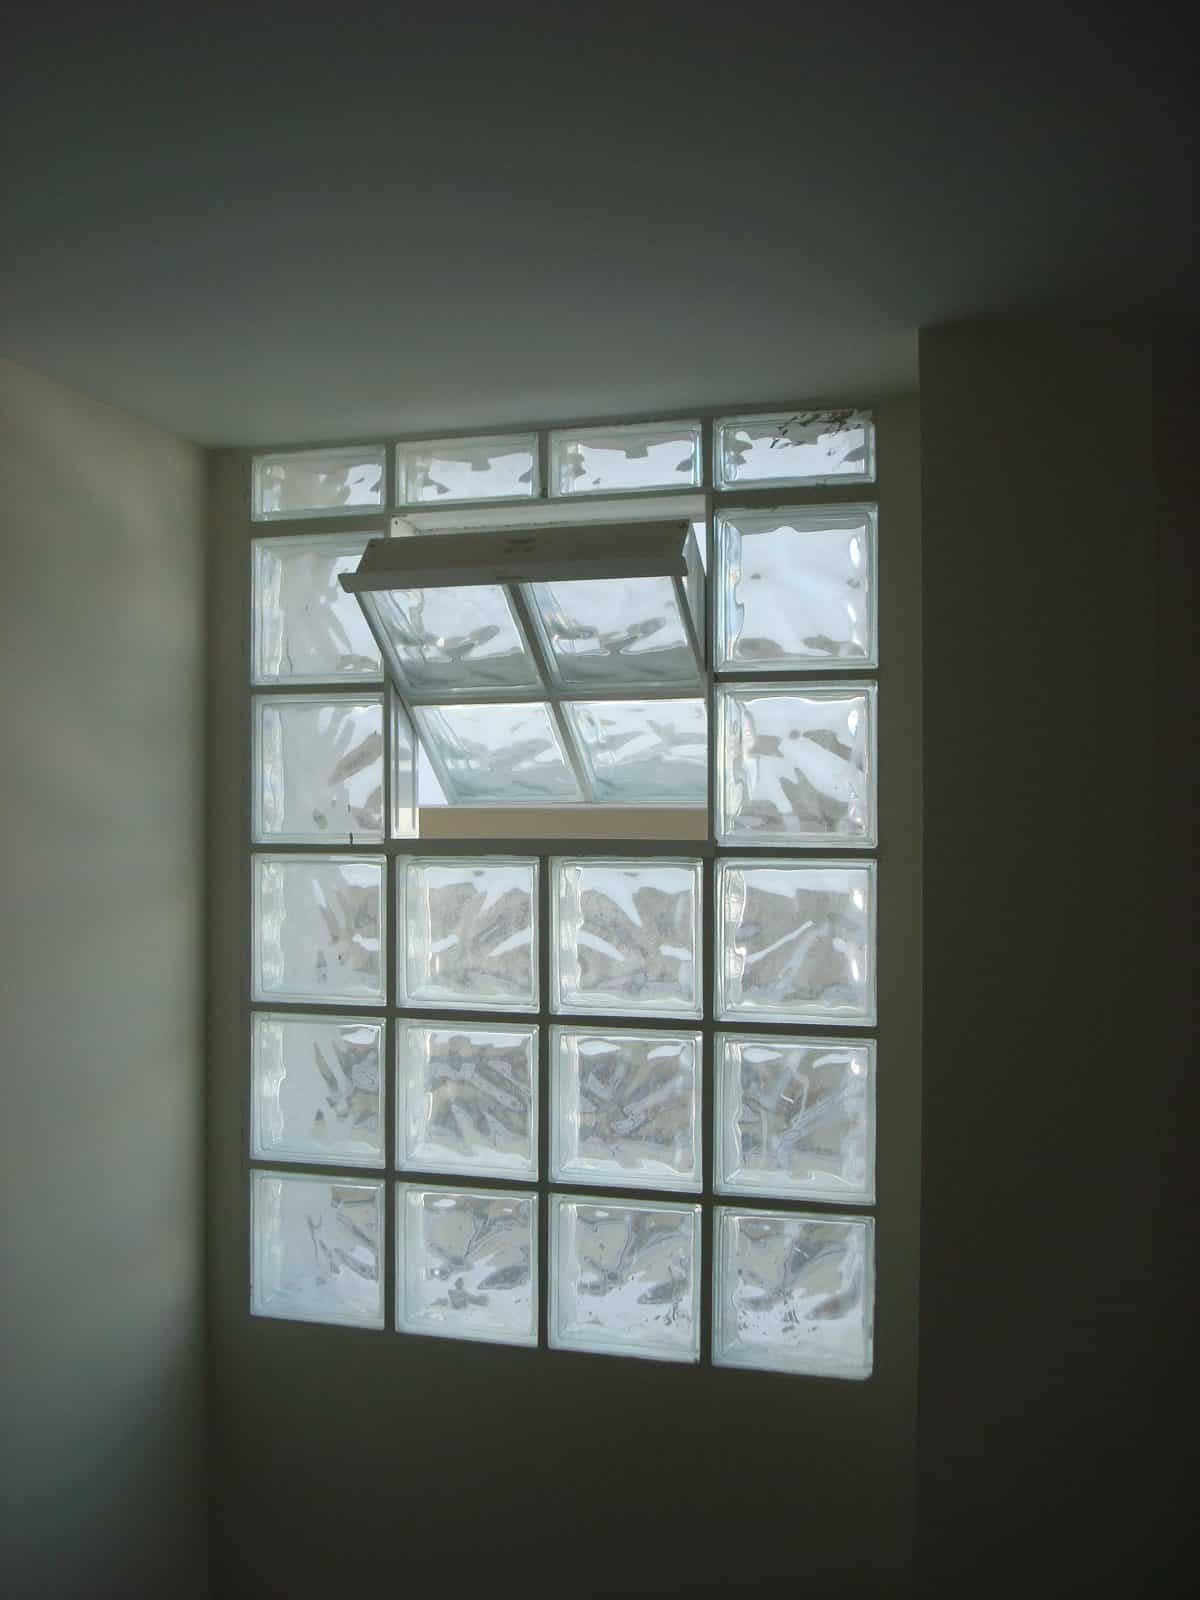 METAL FRAME WINDOW FOR 2 GLASS BLOCKS 24×24 BY DECOMAT (EXTERNAL DIMENSION 26,7×53,5cm)